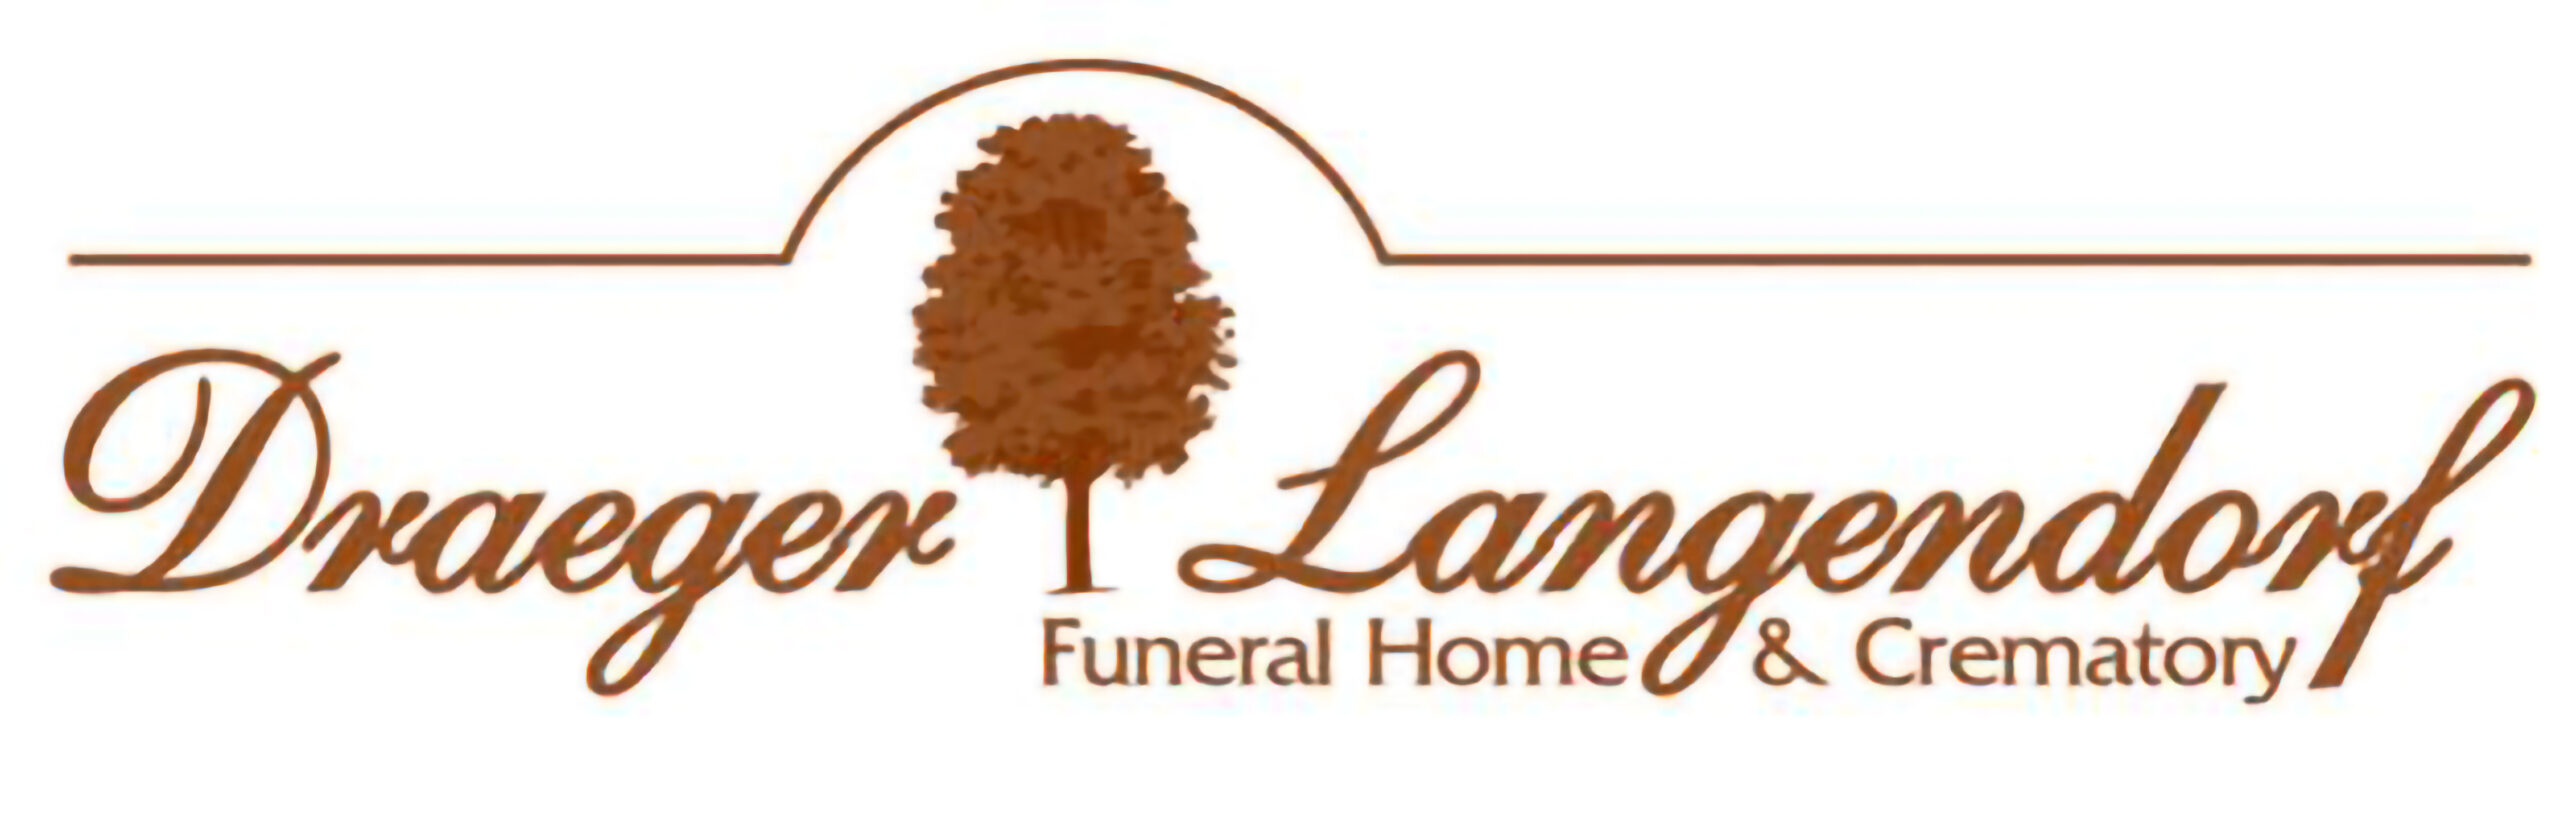 Draeger Langendorf Funeral Home & Crematory logo